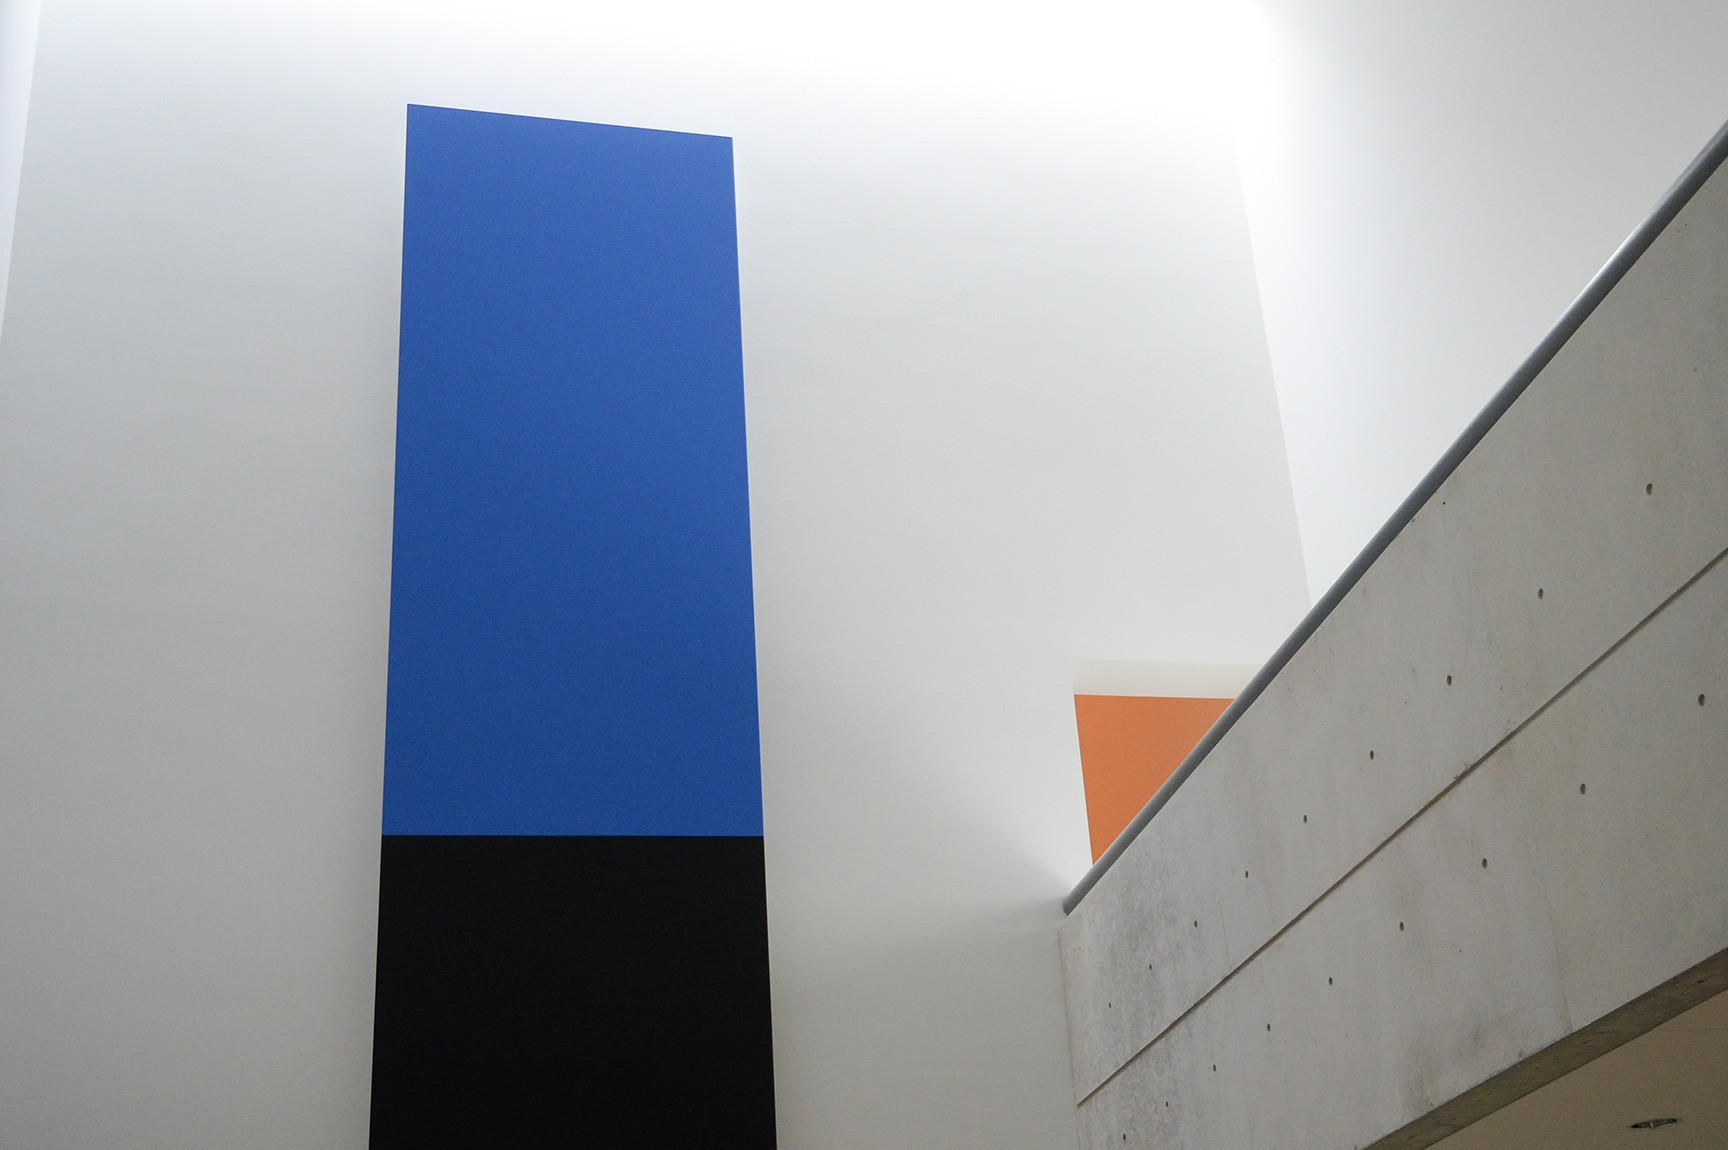 Ellsworth Kelly's Blue Black, a large vertical work composed of blue and black aluminum panels